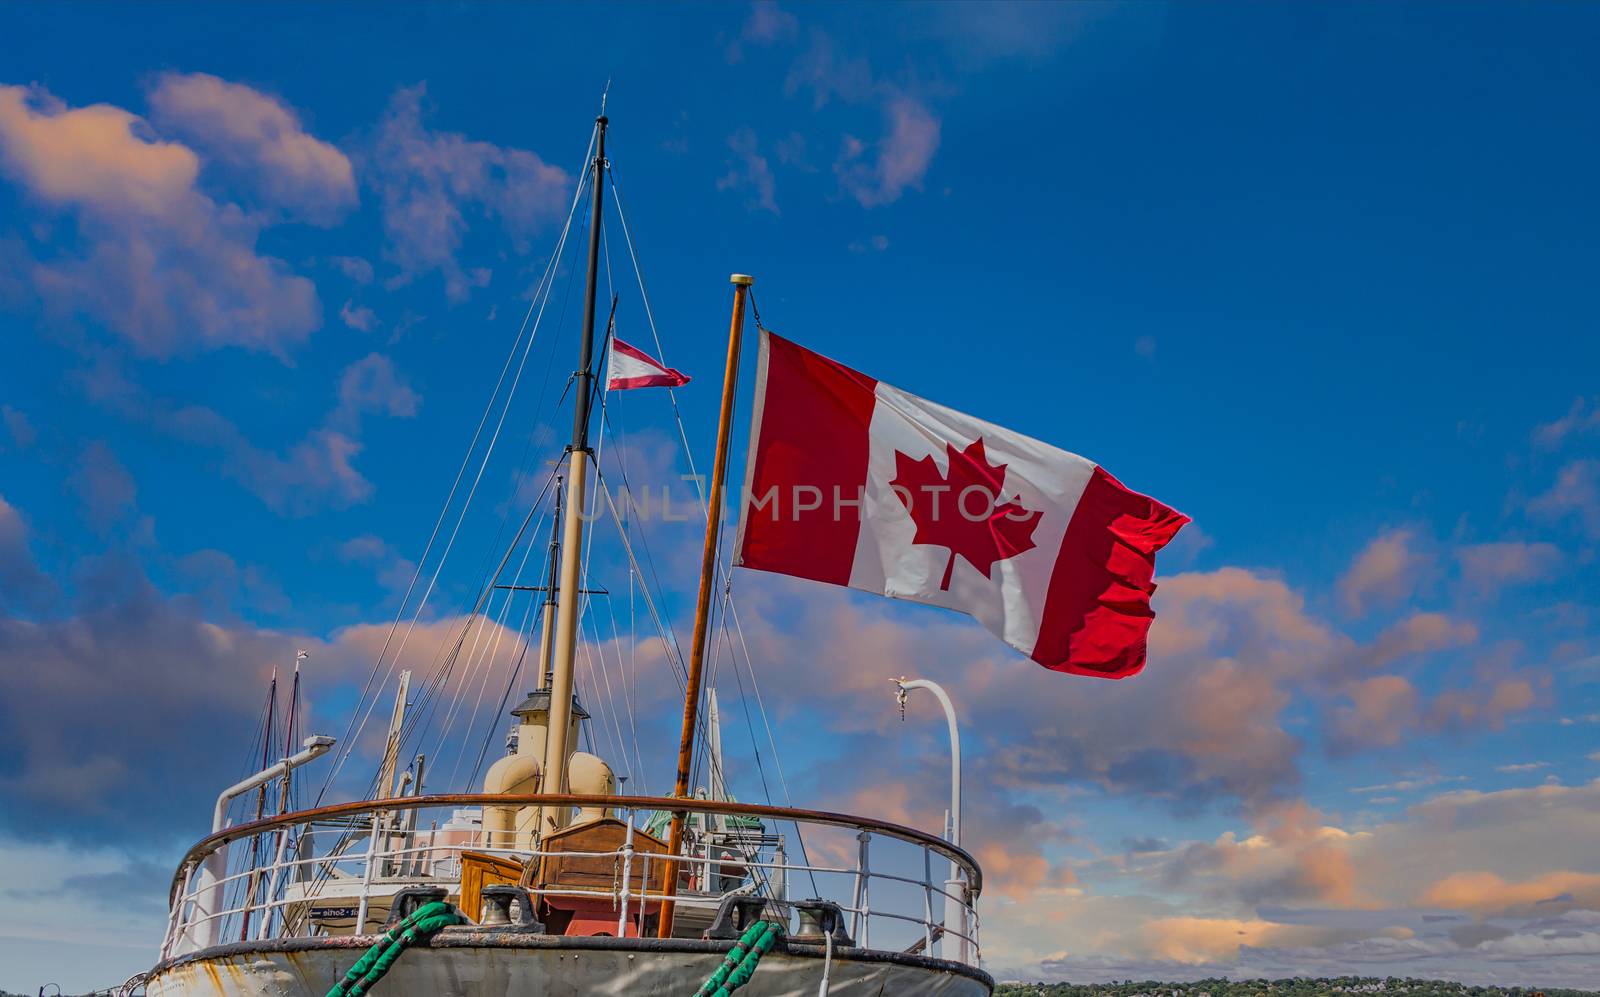 Acadia Oceanographic Ship in Halifax at Dusk by dbvirago